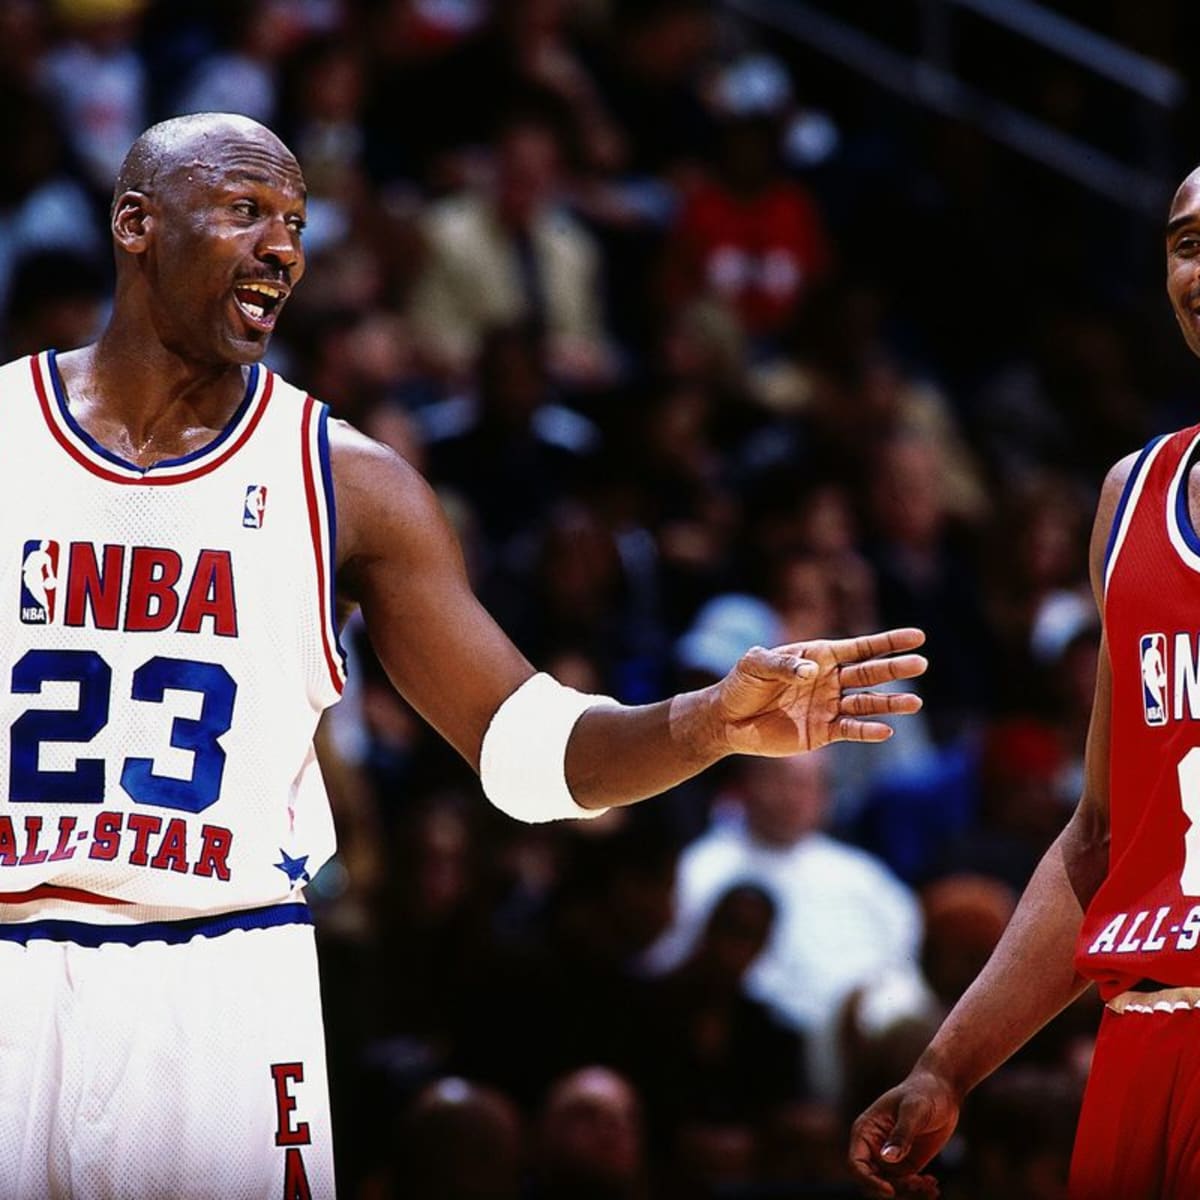 Michael Jordan and Scottie Pippen of the Chicago Bulls talk during an NBA All-Star game in 1992. - Michael Jordan, Kobe Bryant